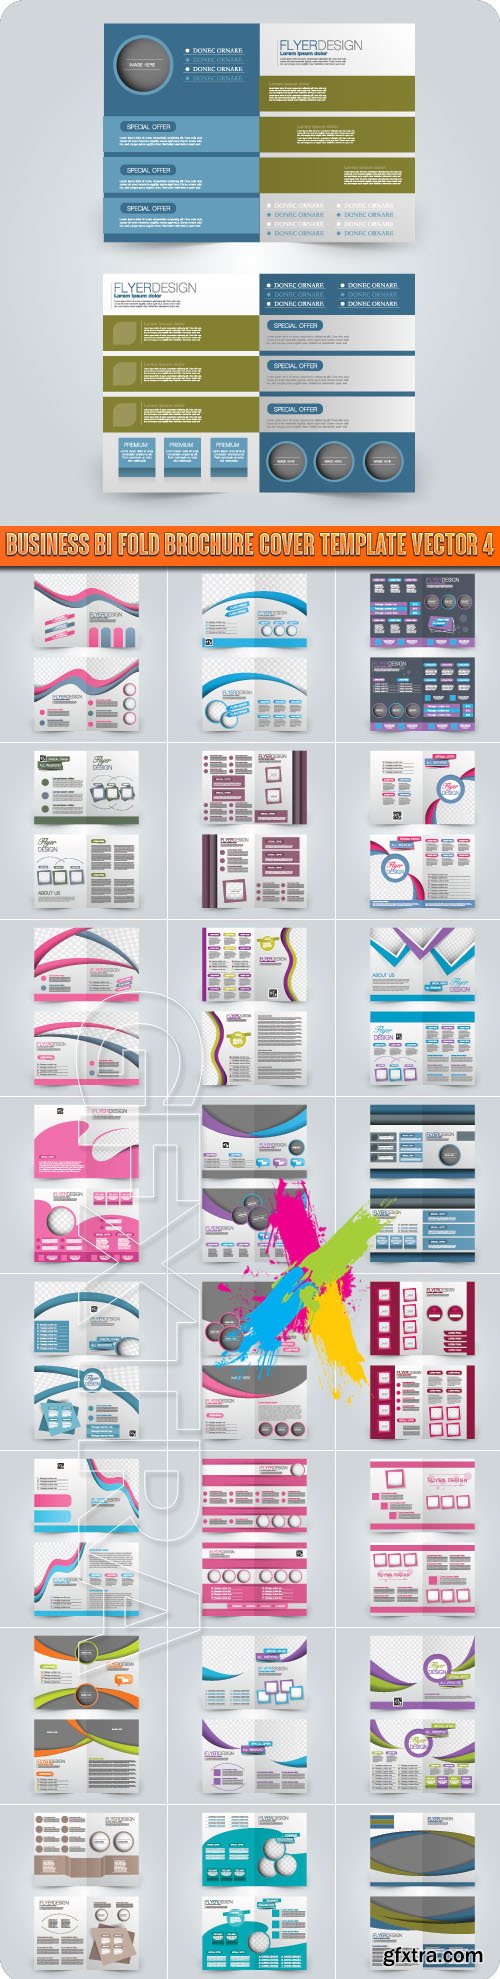 Business bi fold brochure cover template vector 4